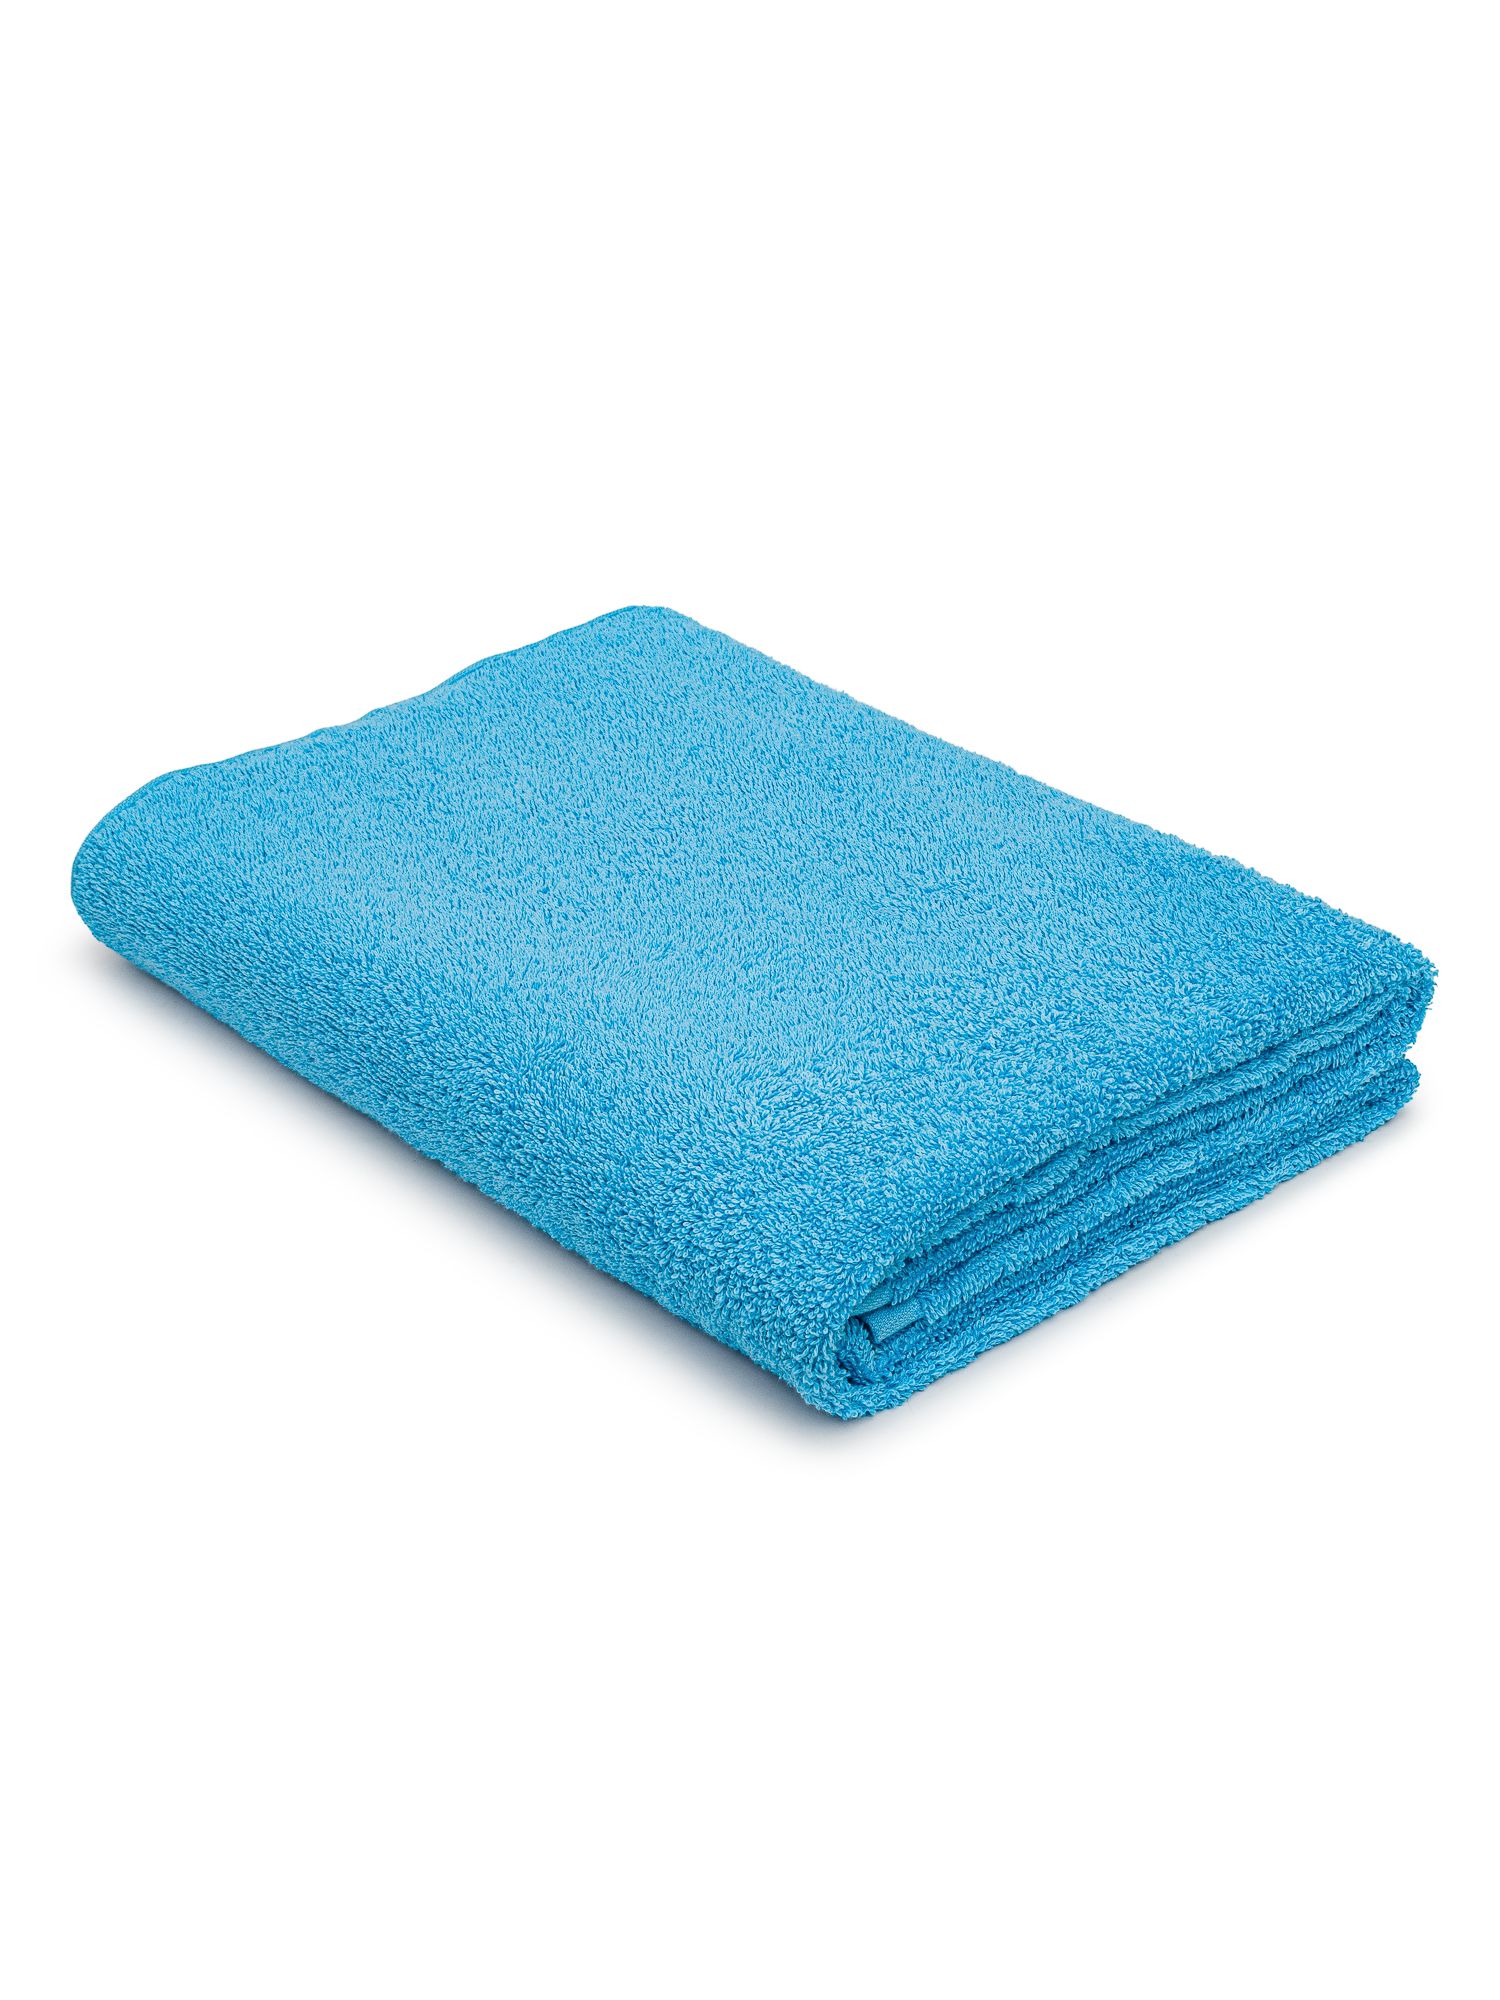 Махровое полотенце 70х140 банное TCStyle голубое 1 шт 470 гр/м2